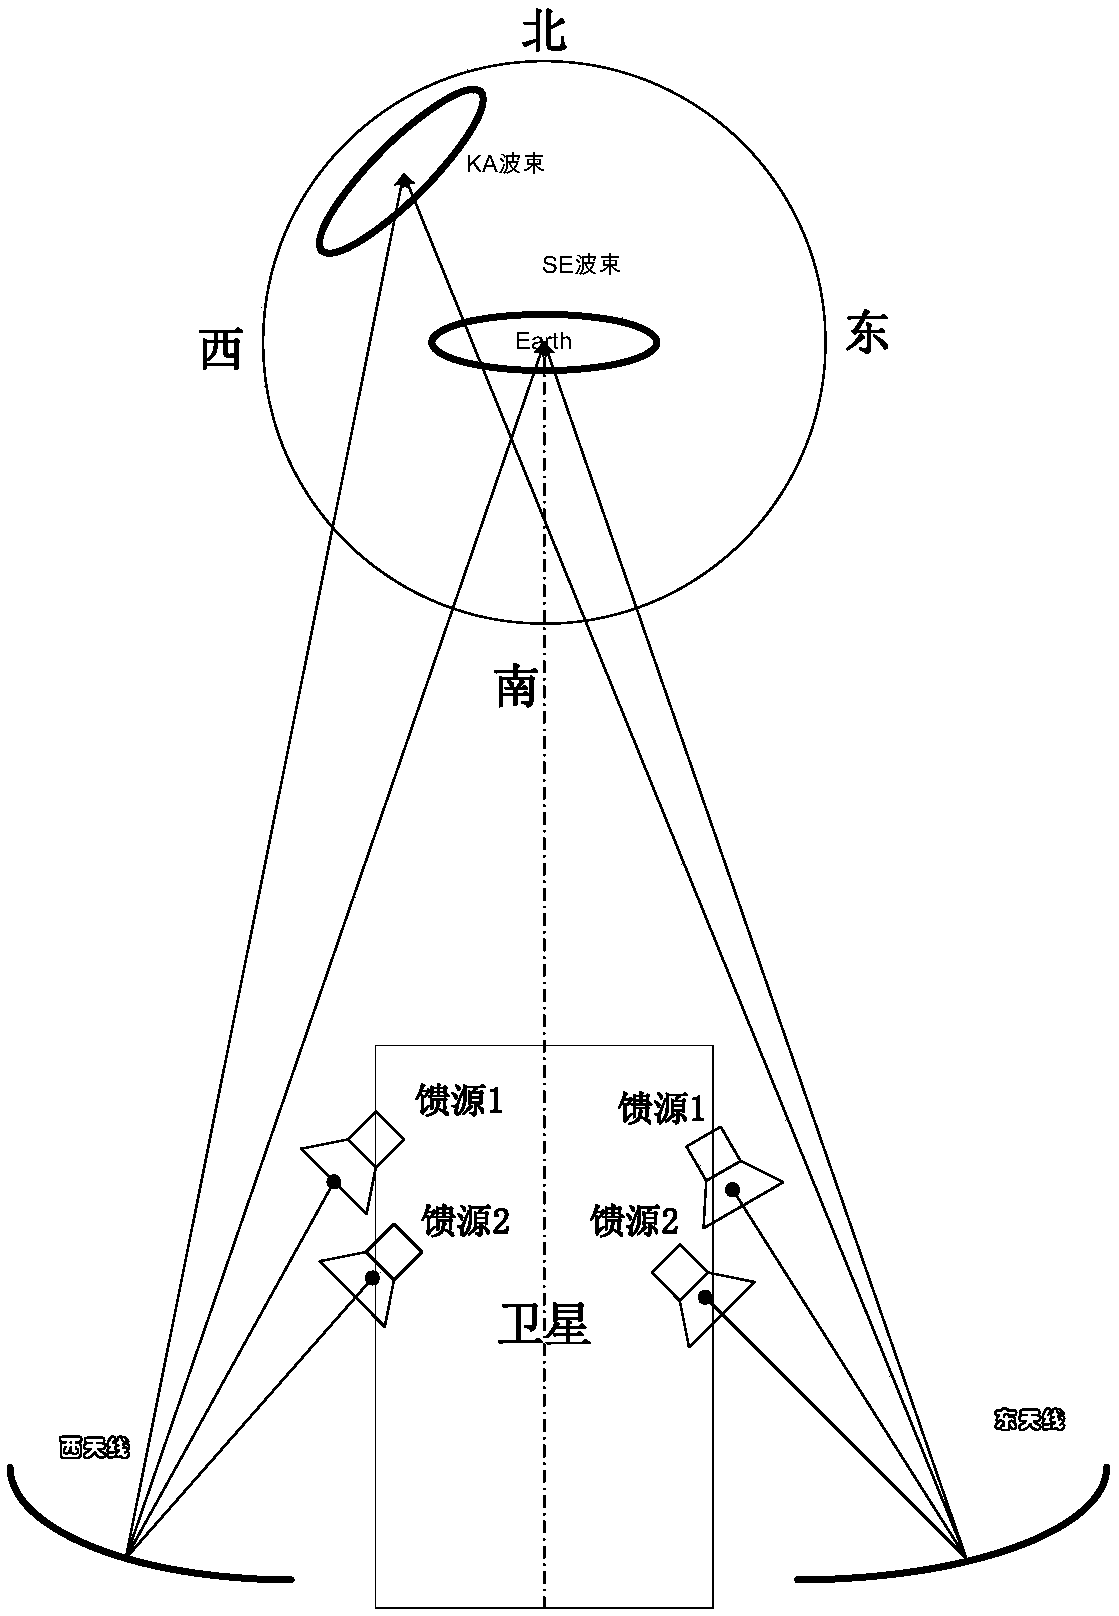 A dual-beamforming design method for reflector antennas